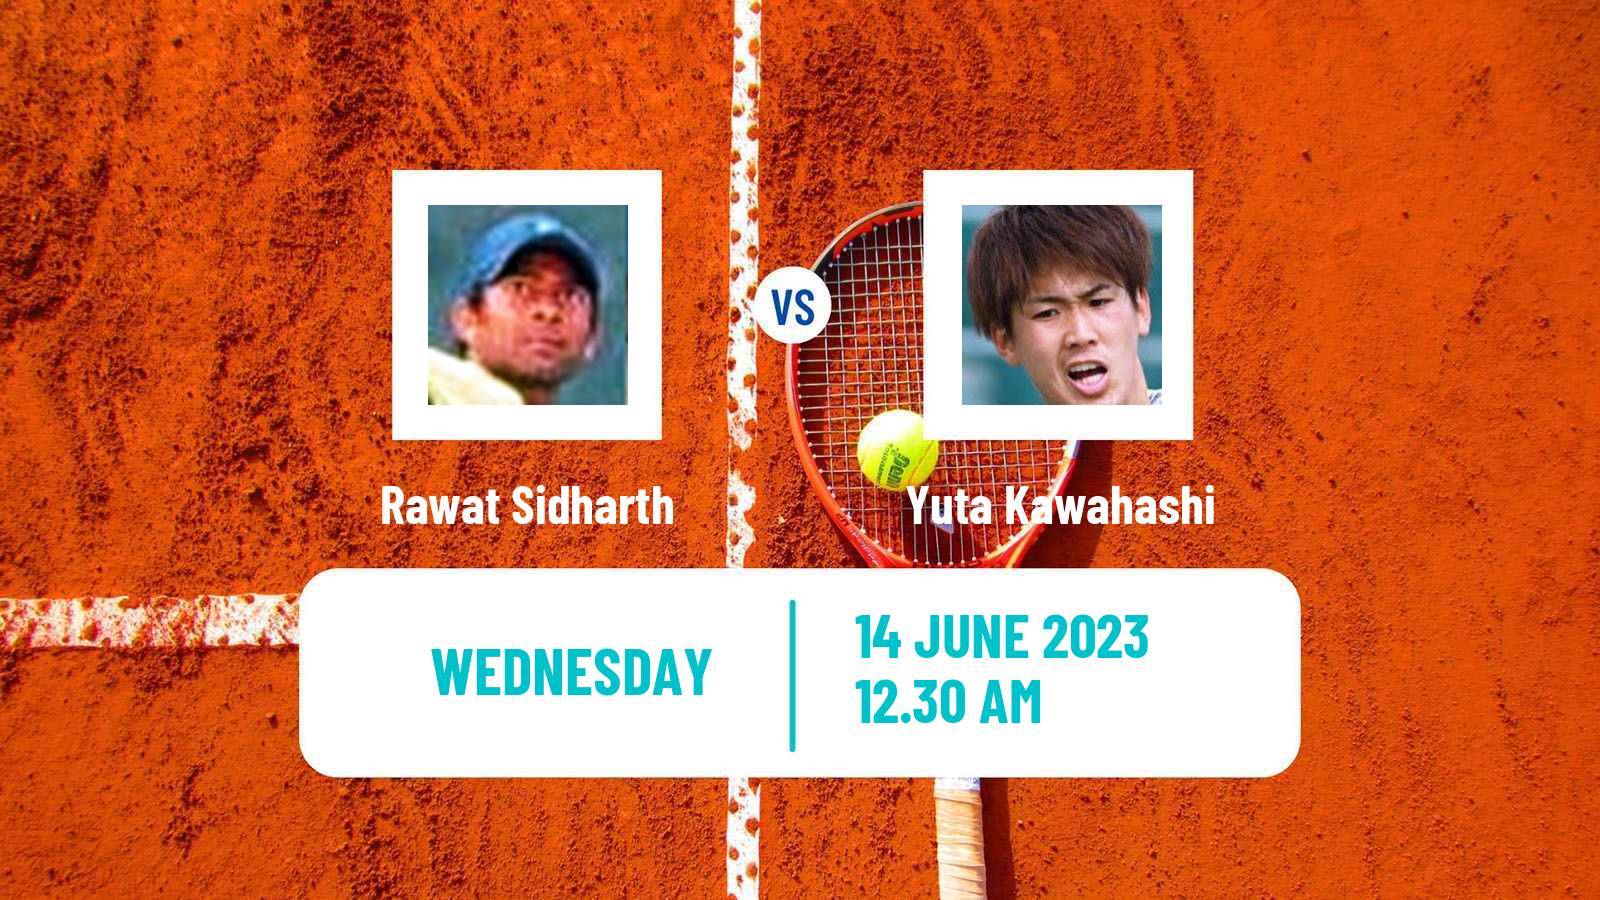 Tennis ITF M15 Jakarta 3 Men Rawat Sidharth - Yuta Kawahashi